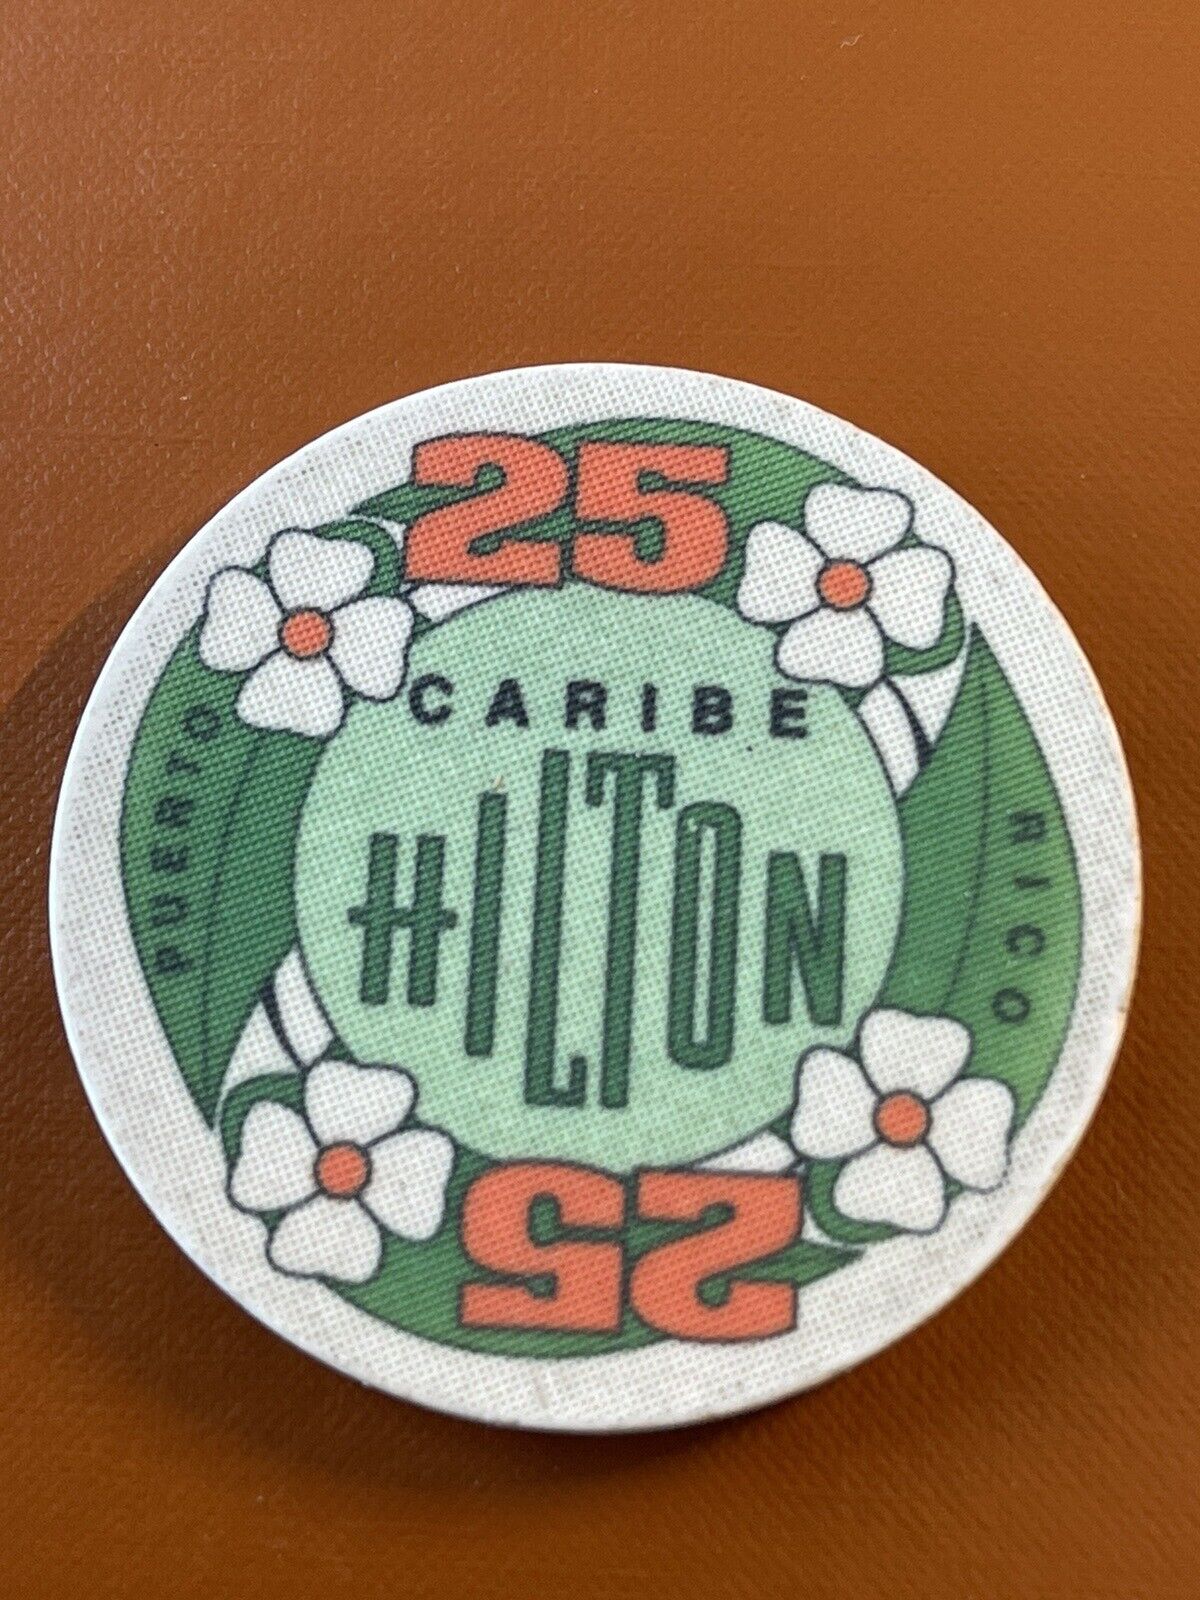 $25 Caribe Hilton San Juan Puerto Rico Casino Chip CC CHC-25a